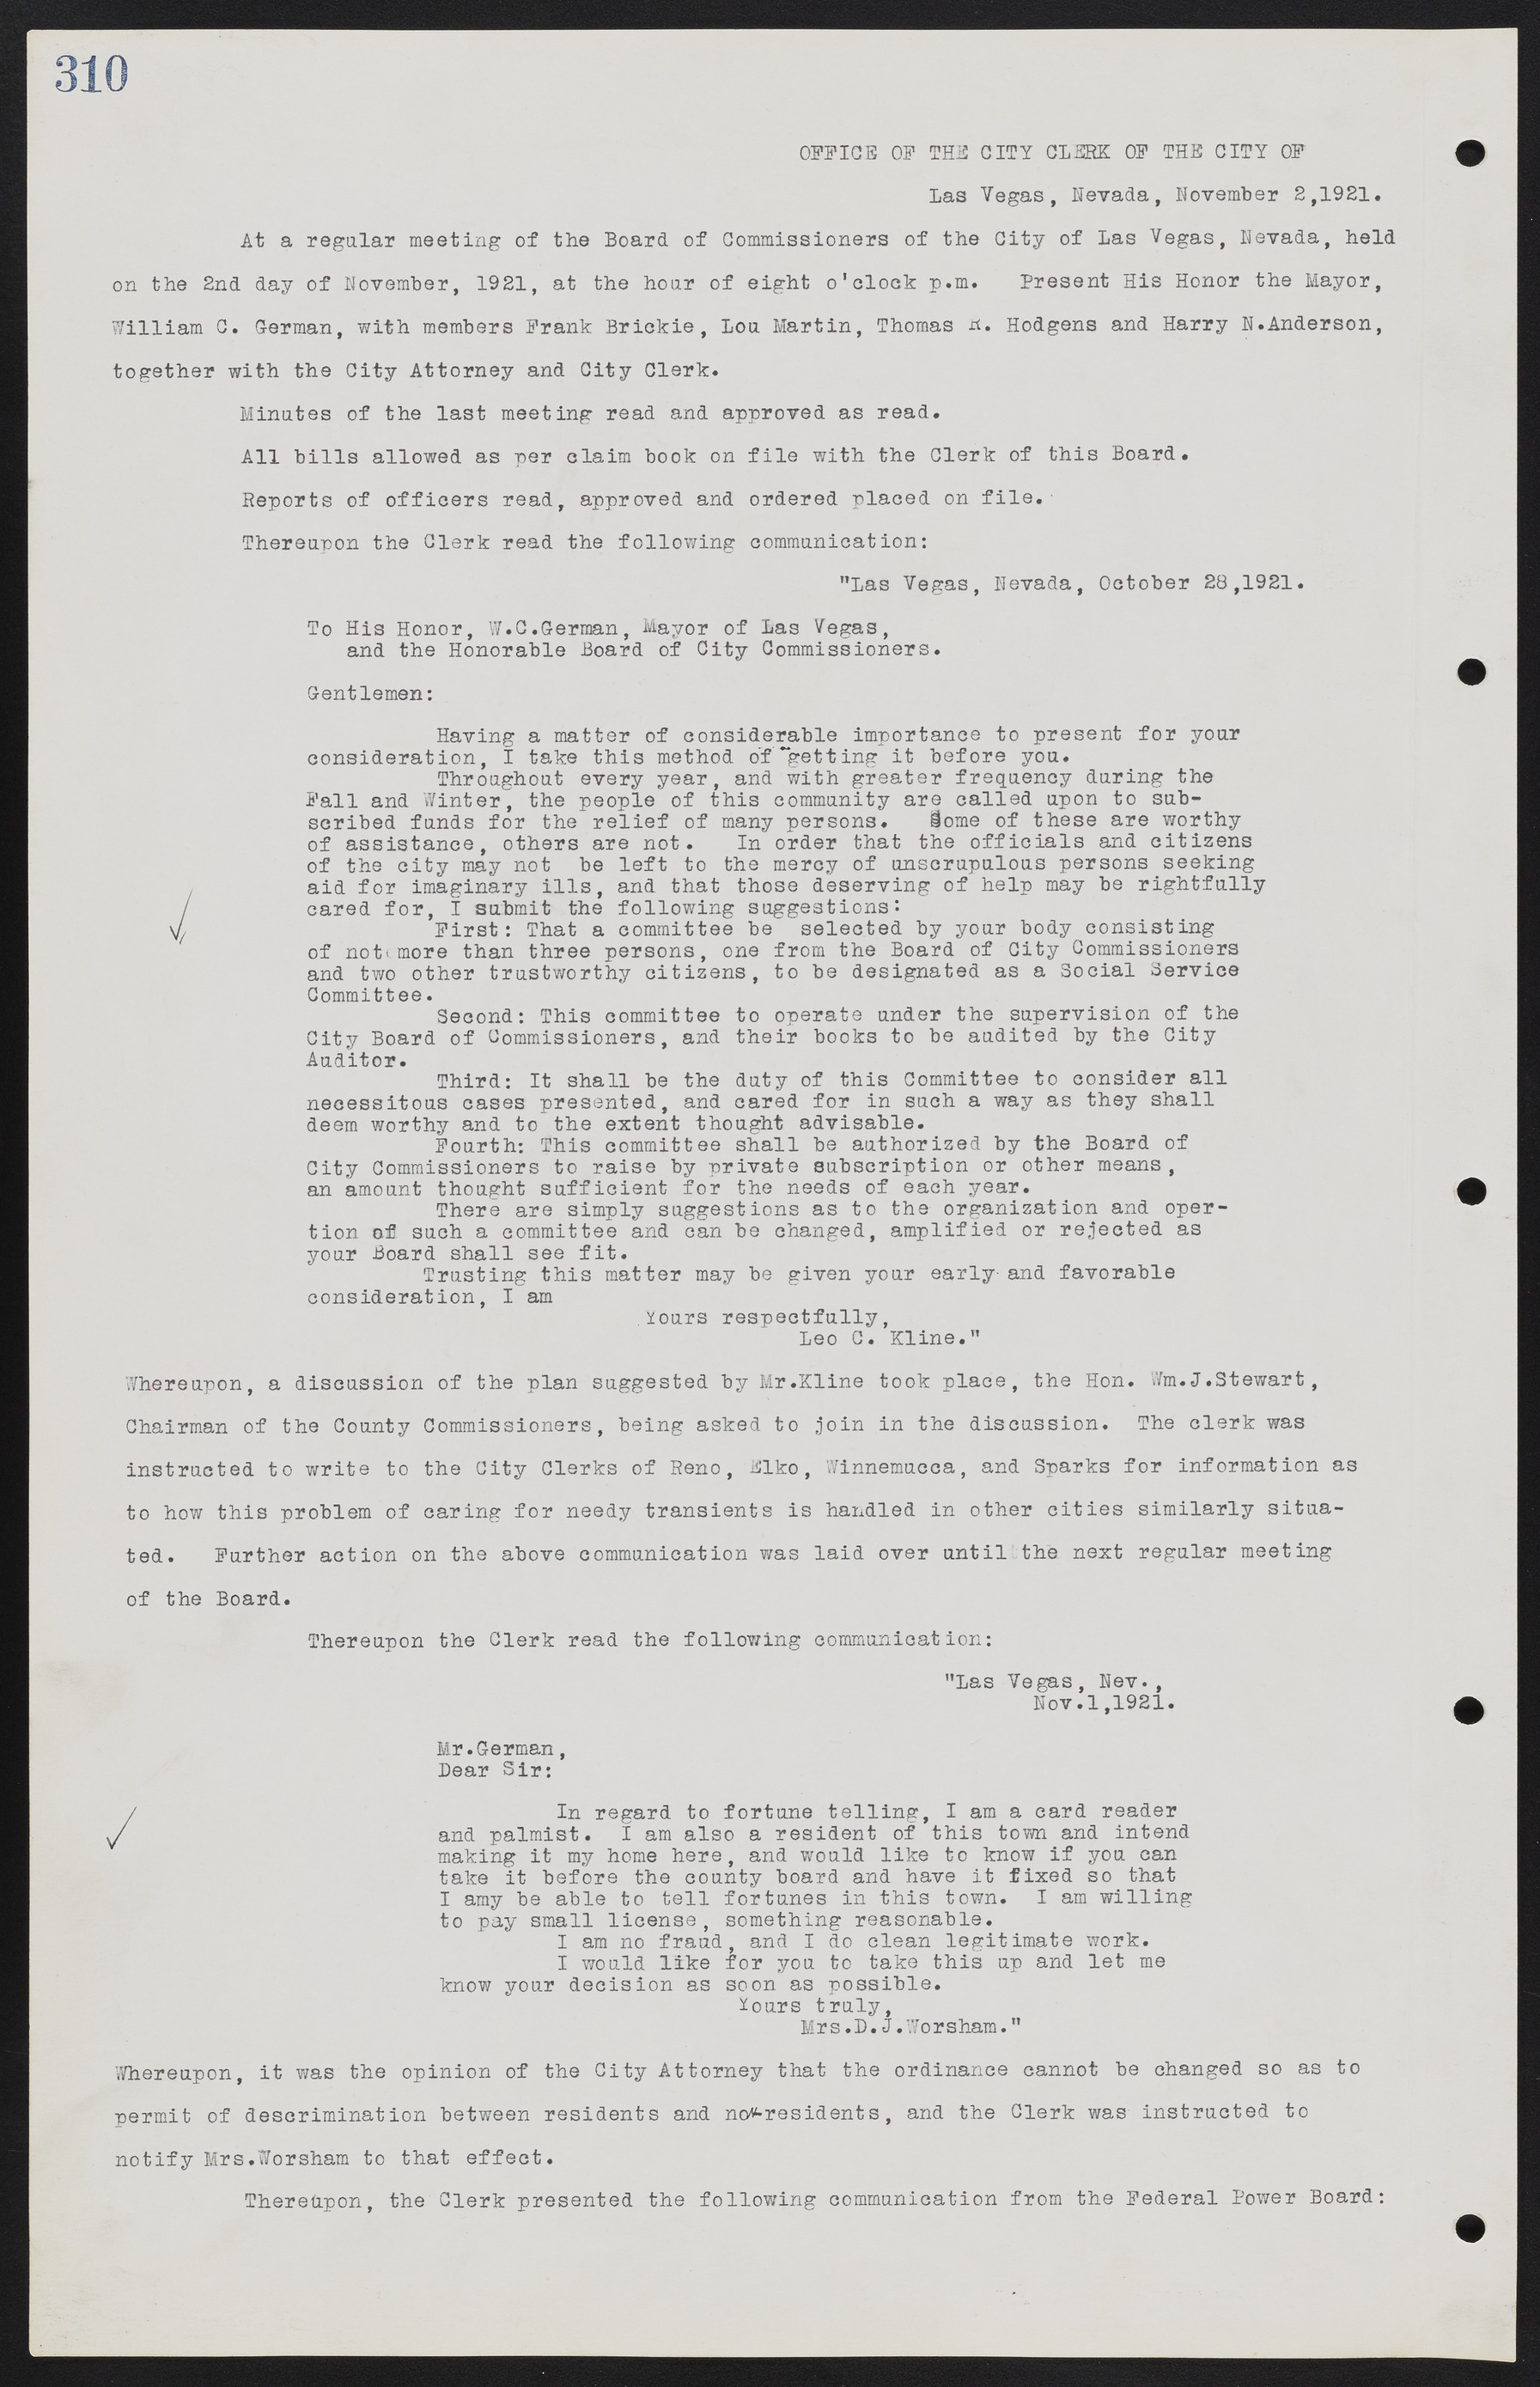 Las Vegas City Commission Minutes, June 22, 1911 to February 7, 1922, lvc000001-326